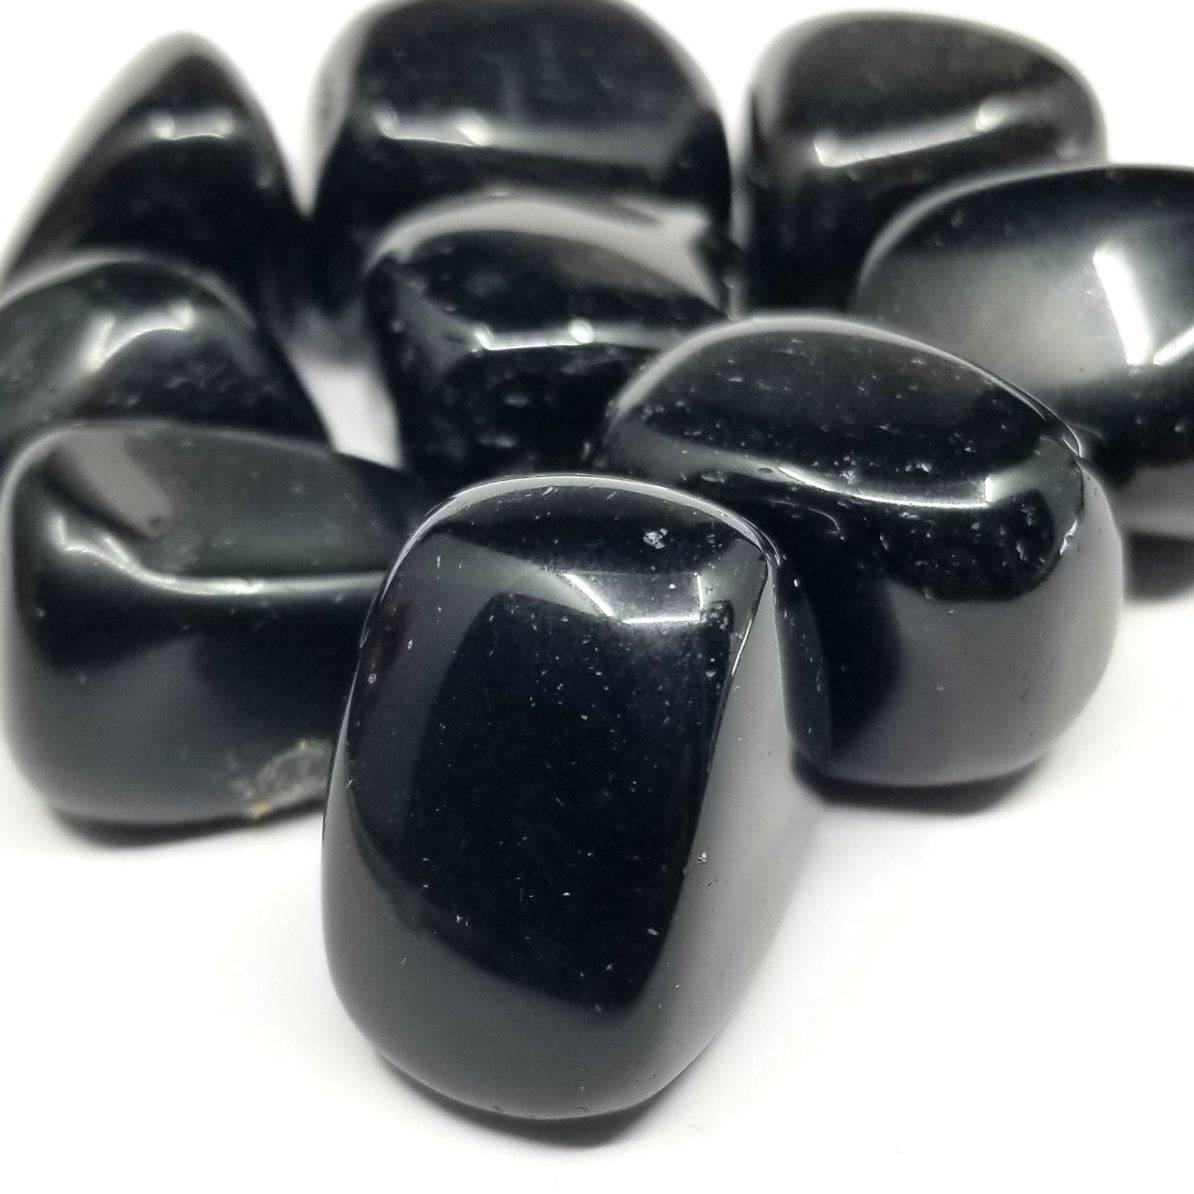 Black Obsidian Tumbled Stones 1 lb